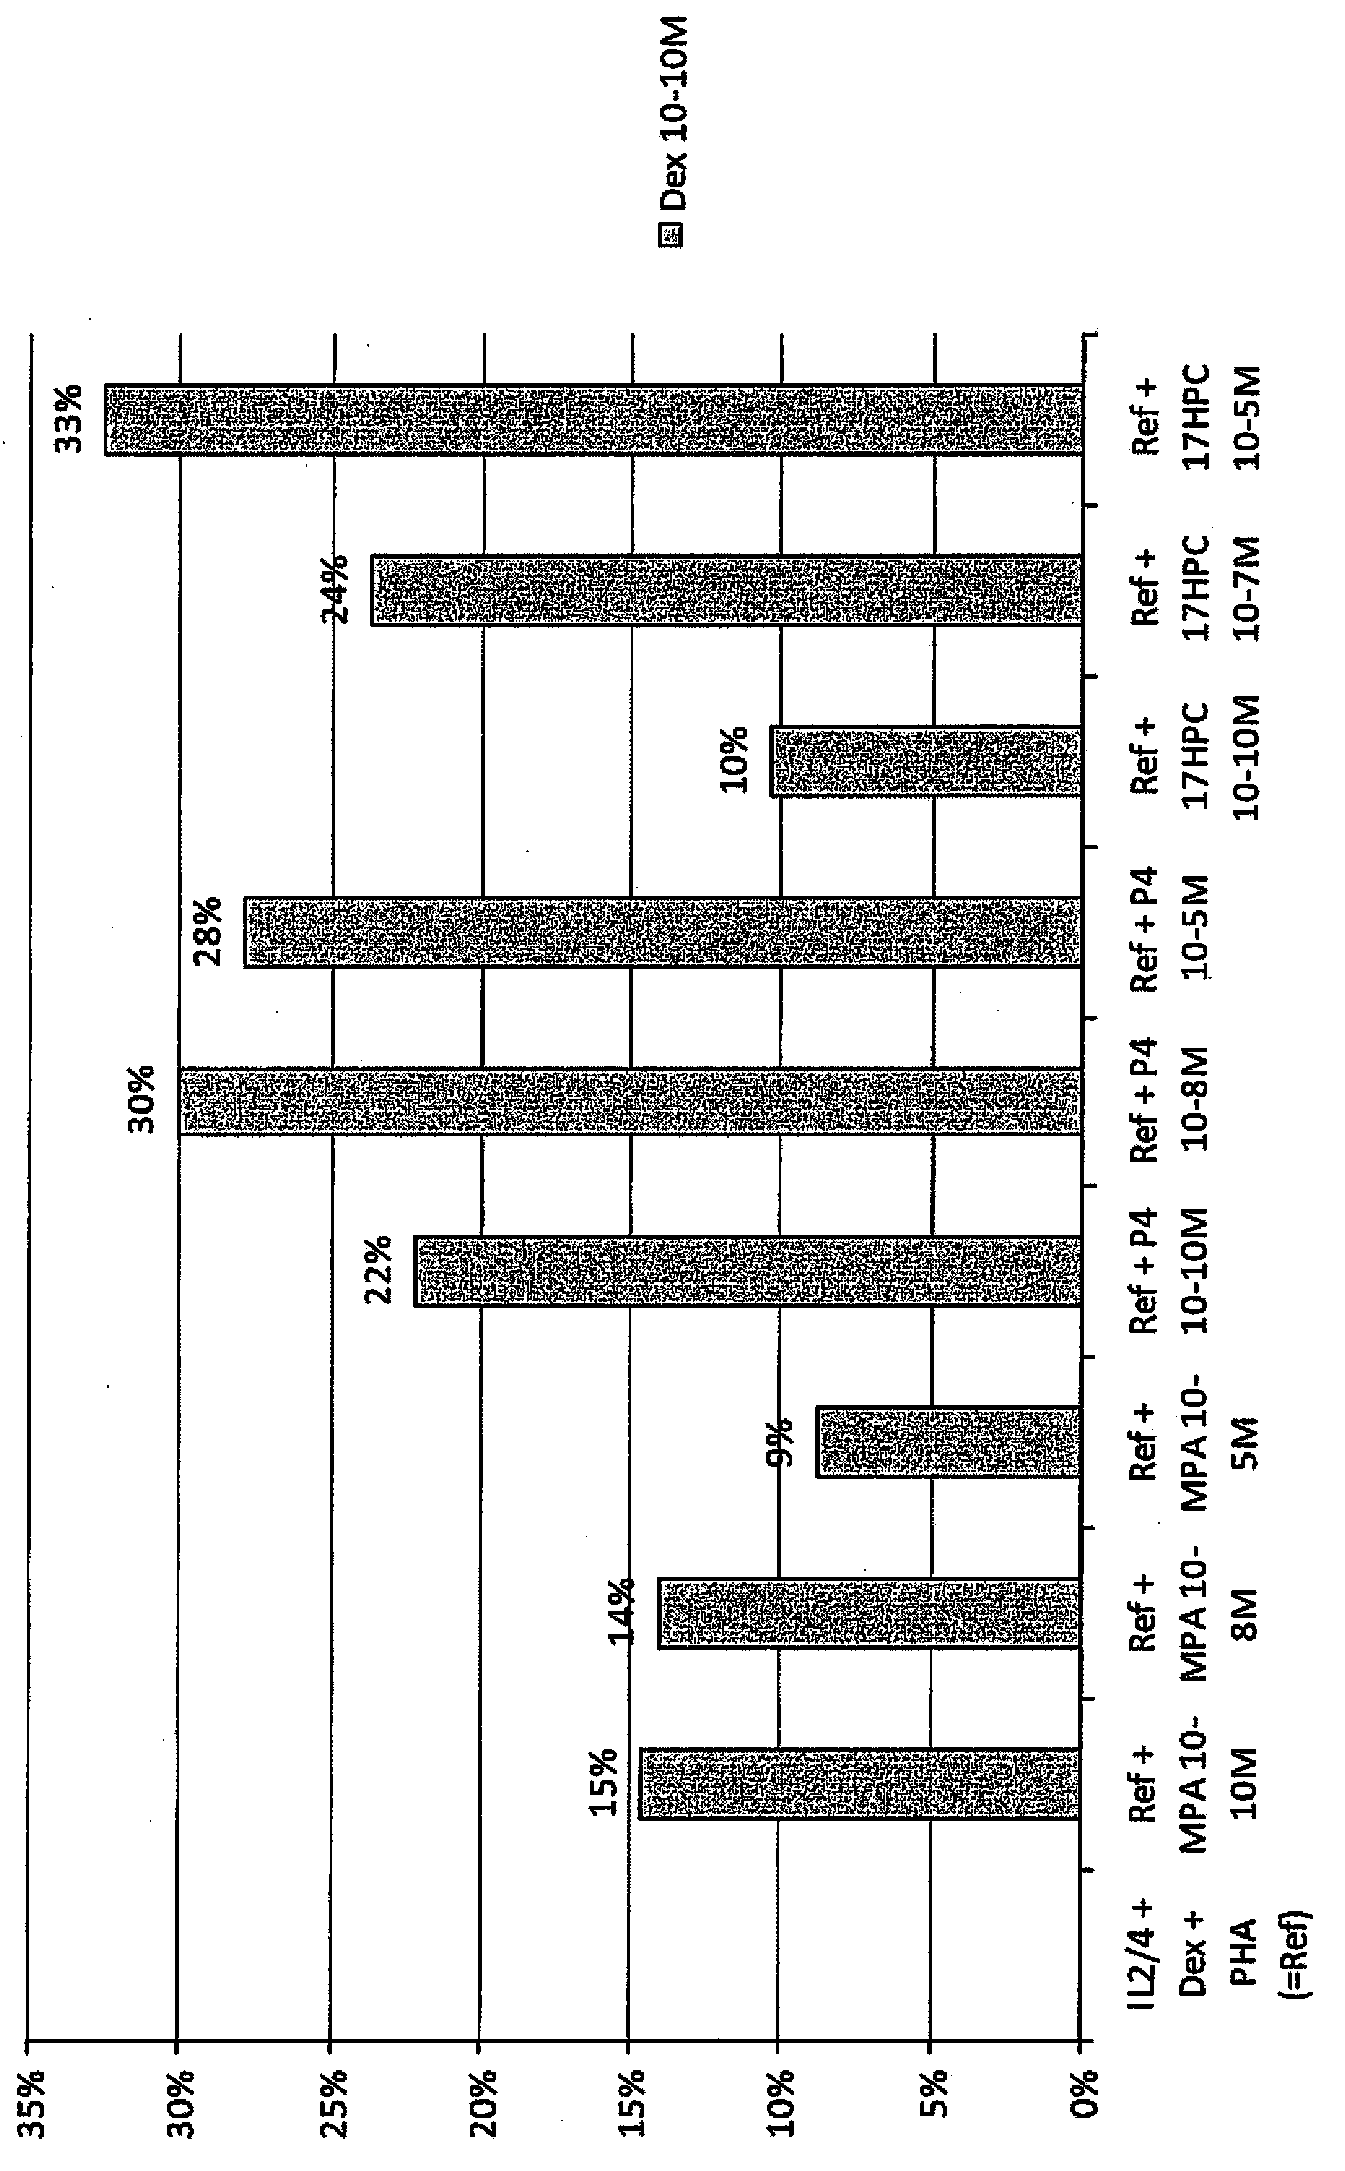 Pulmonary delivery of 17-hydroxyprogesterone caproate (17-HPC)